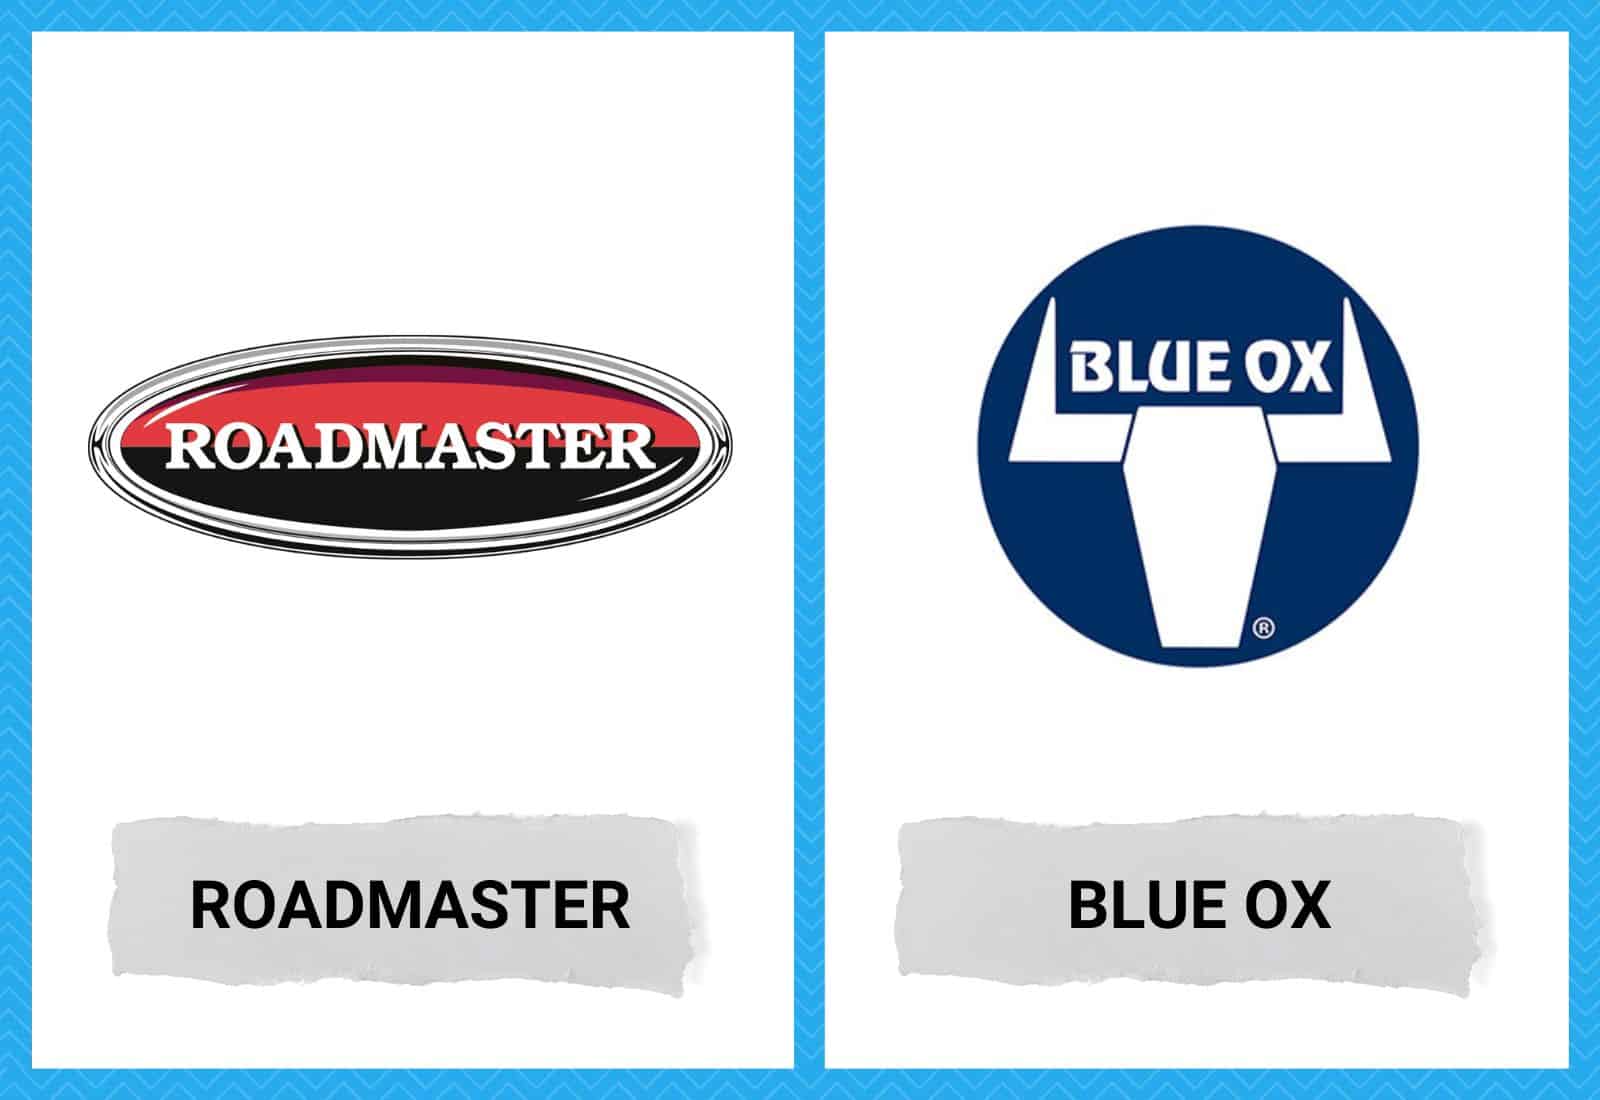 Roadmaster vs Blue OX